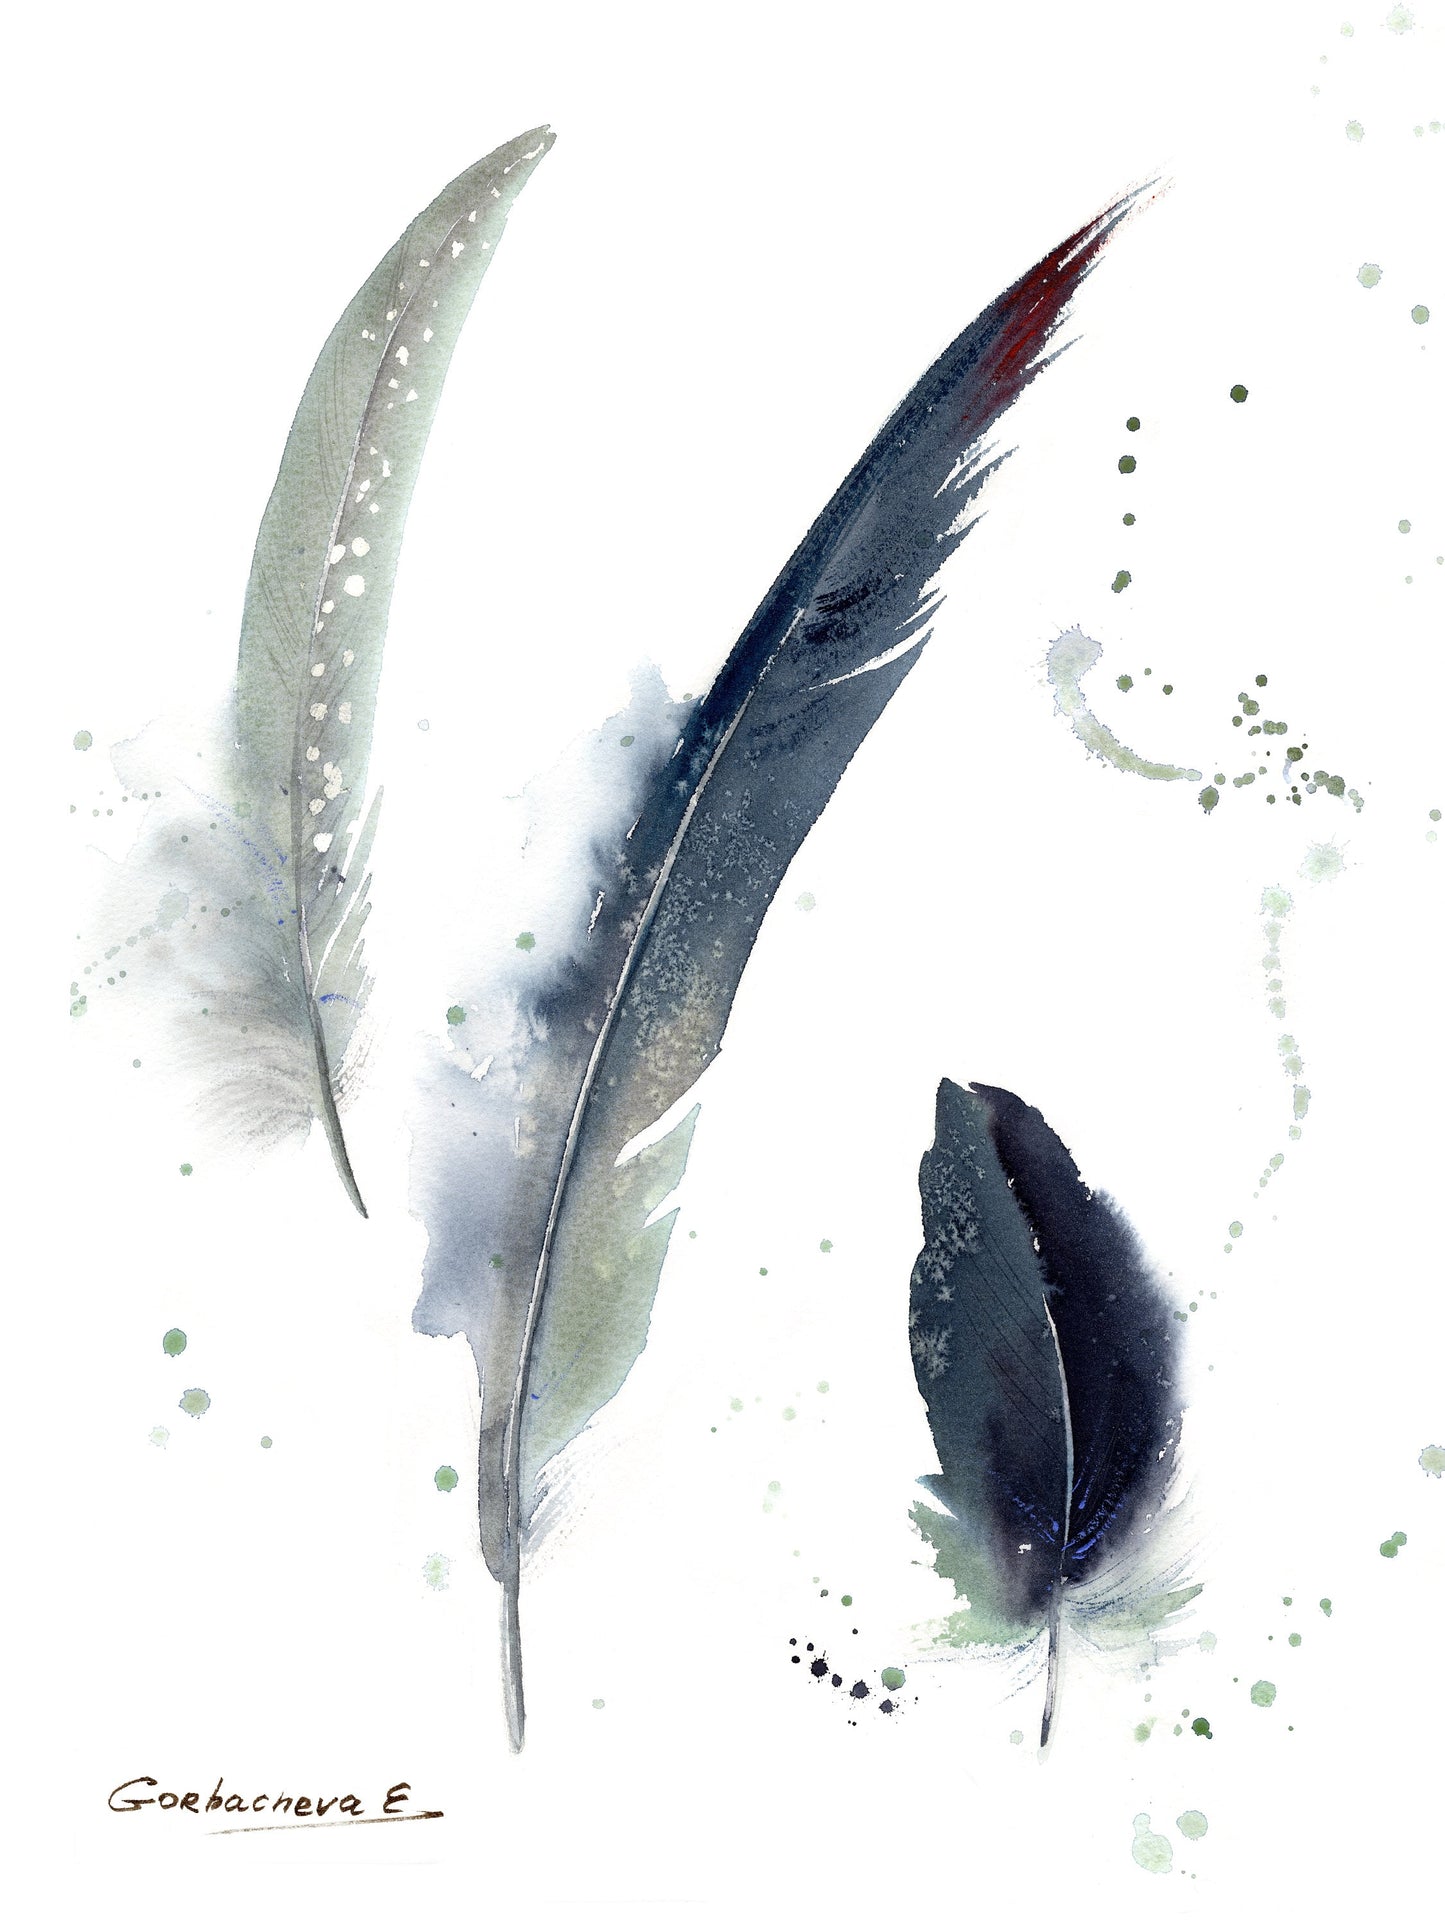 Bird Print Set of 2 Piece, Watercolor Art Prints, Grey Crowned Crane, Minimalist Wall Decor, Feather Tropic Decoration